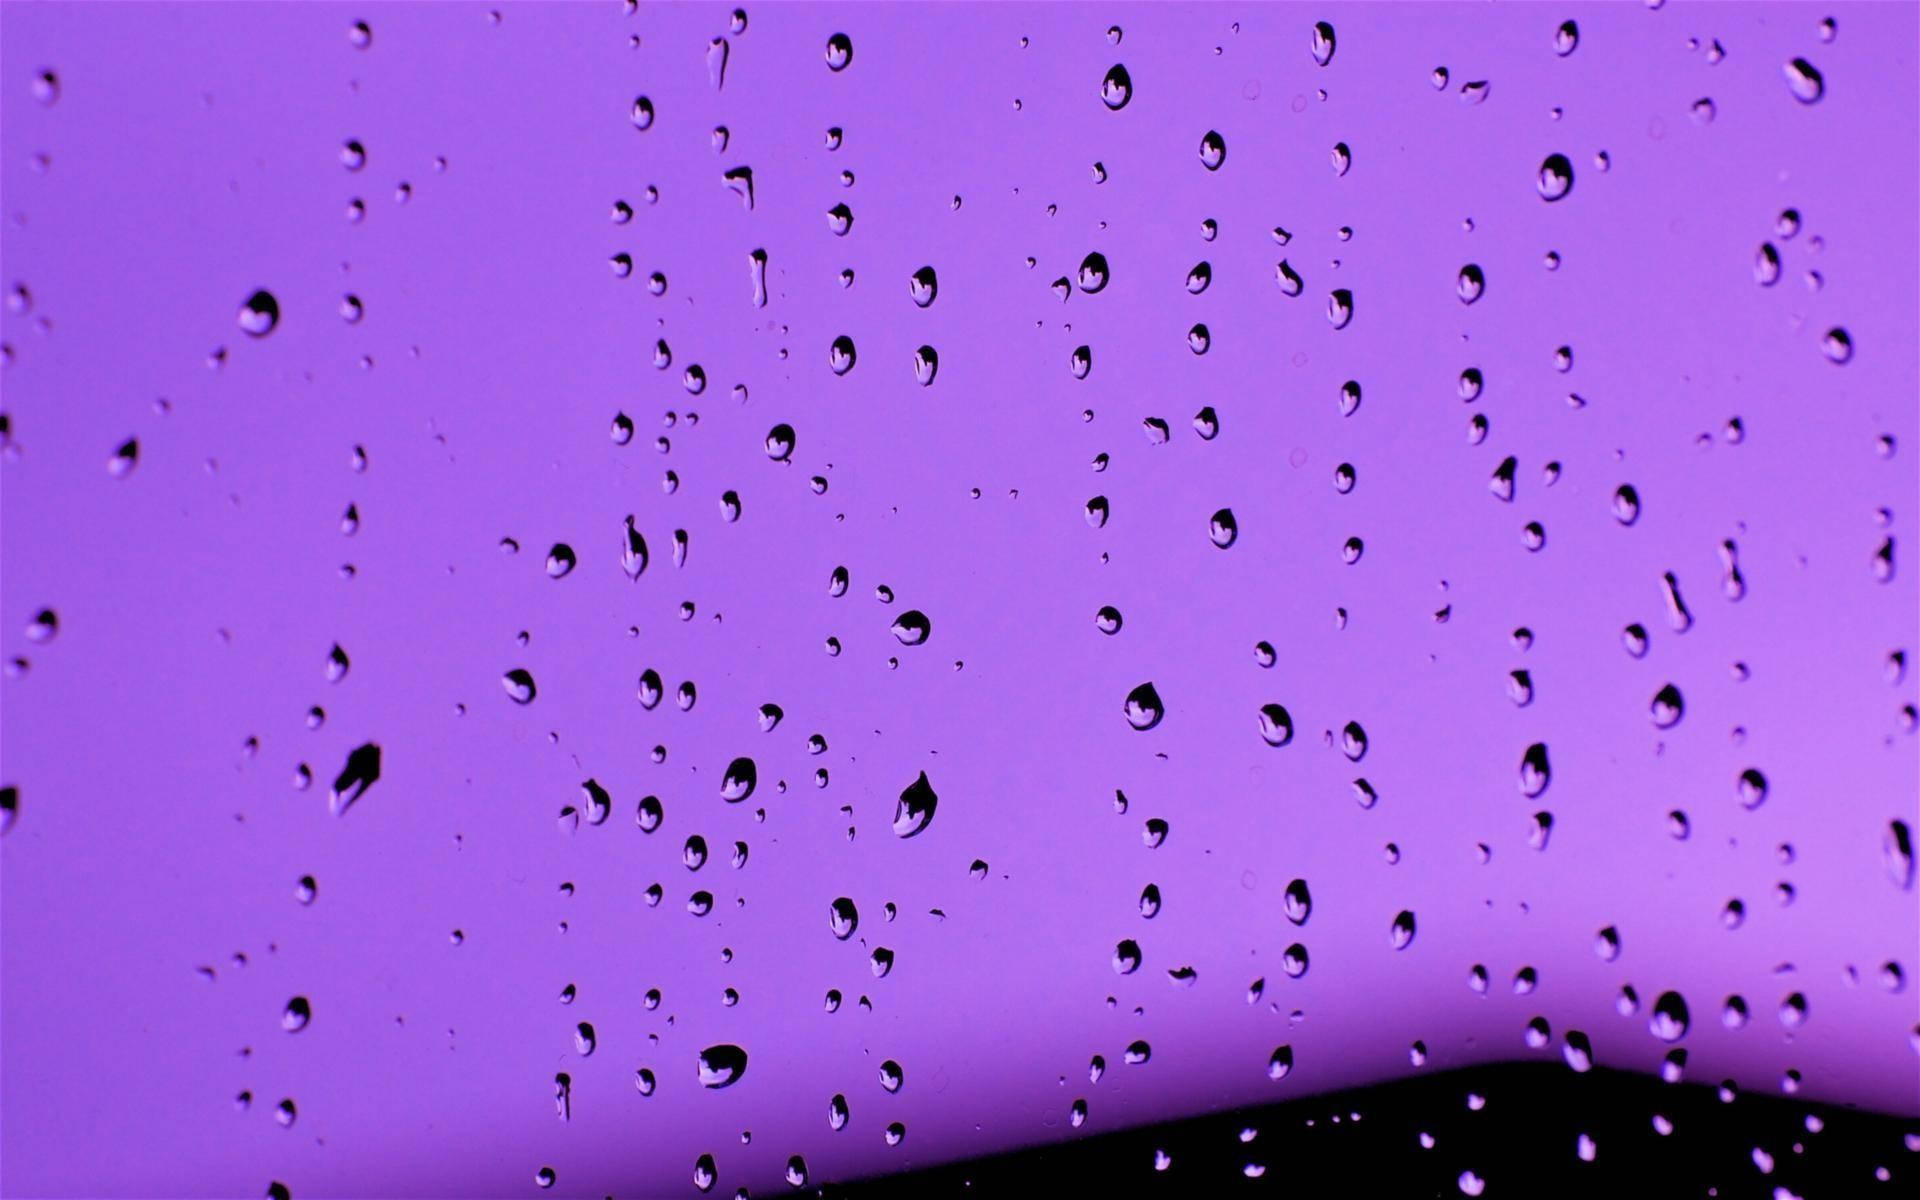 Droplets On Window With Light Purple Grading